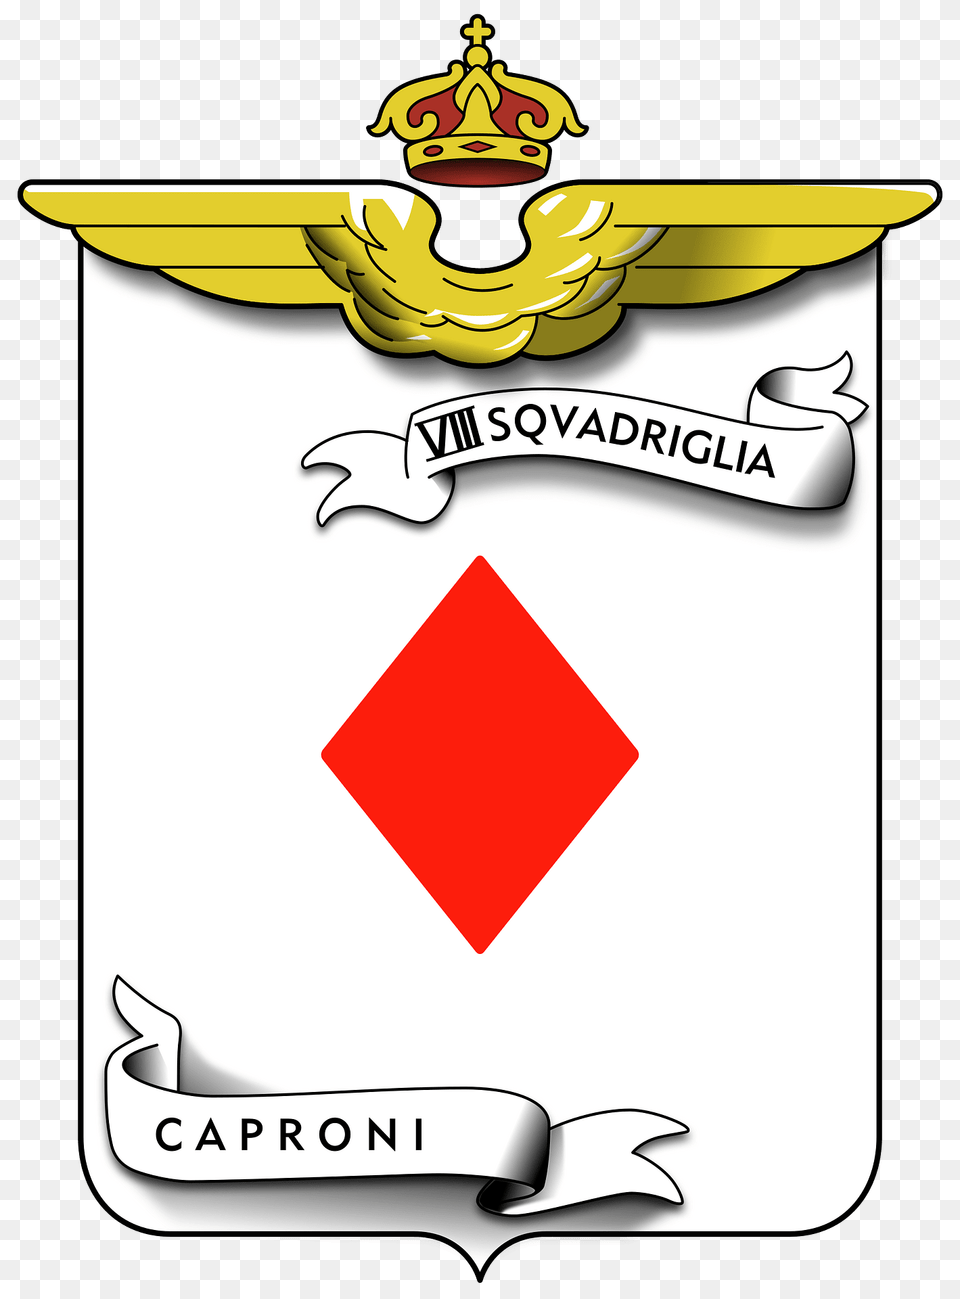 Coa Viii Squadriglia Caproni Diamond Clipart, Logo, Smoke Pipe Png Image